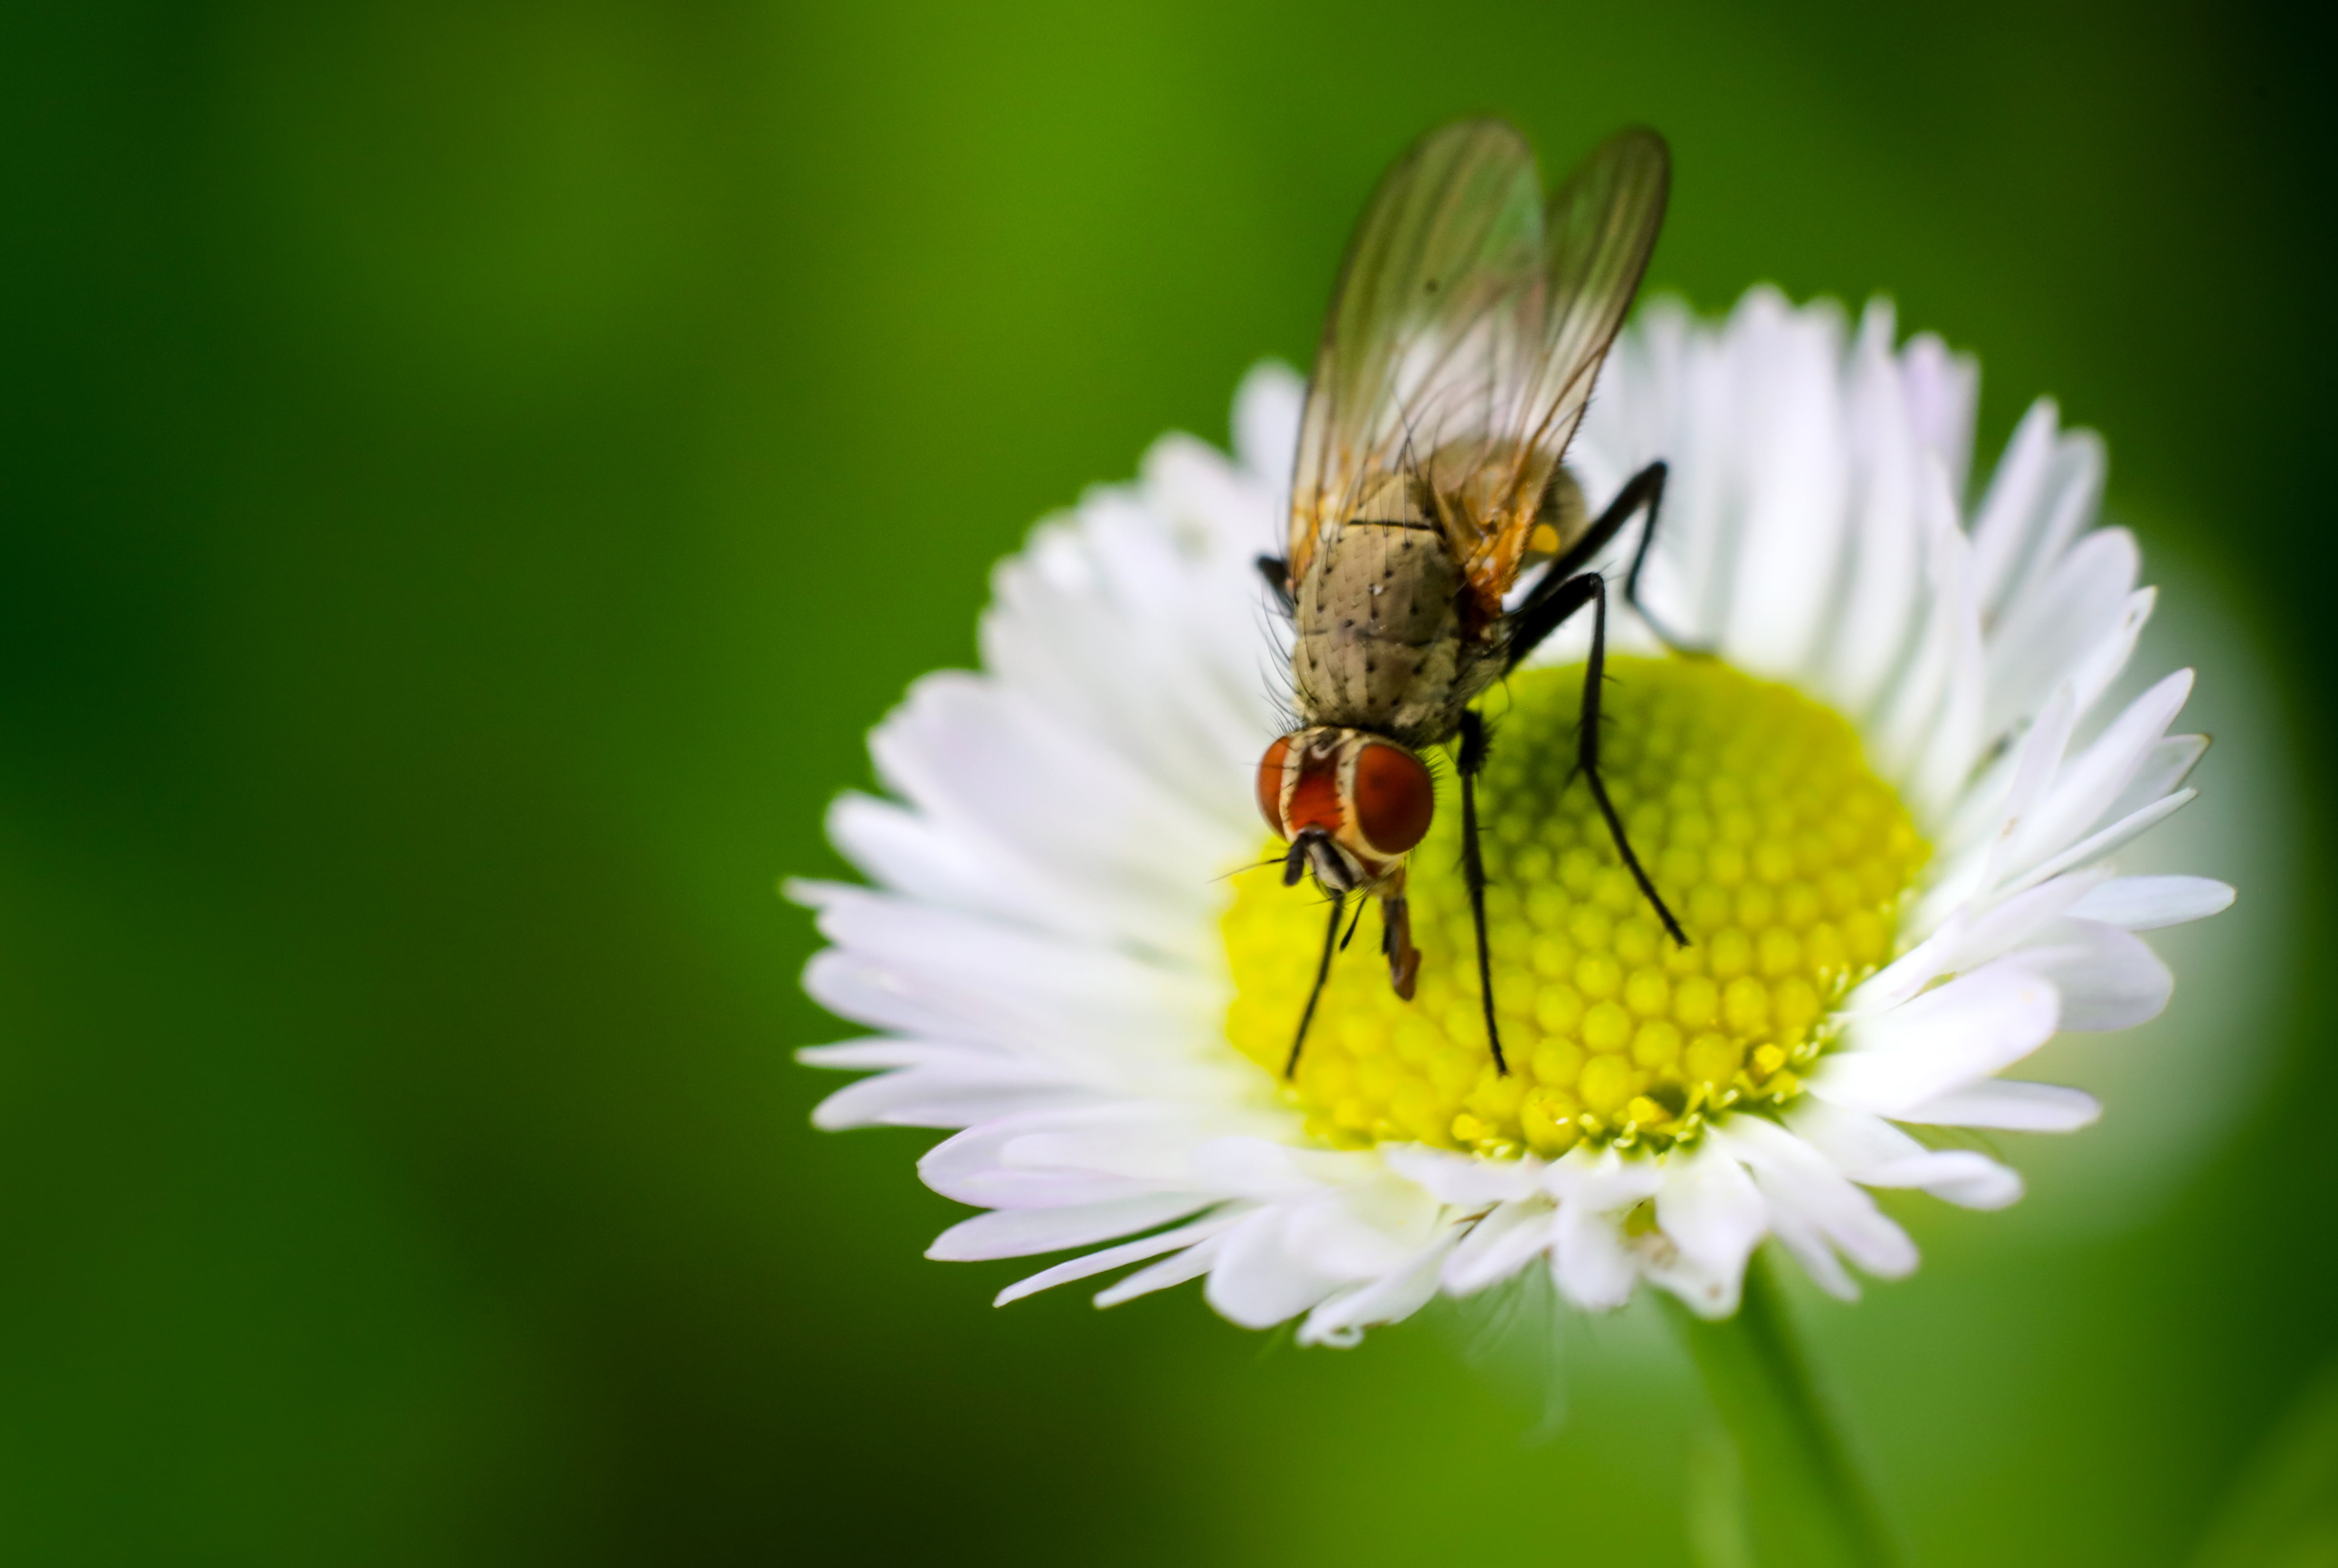 Housefly on flower photo